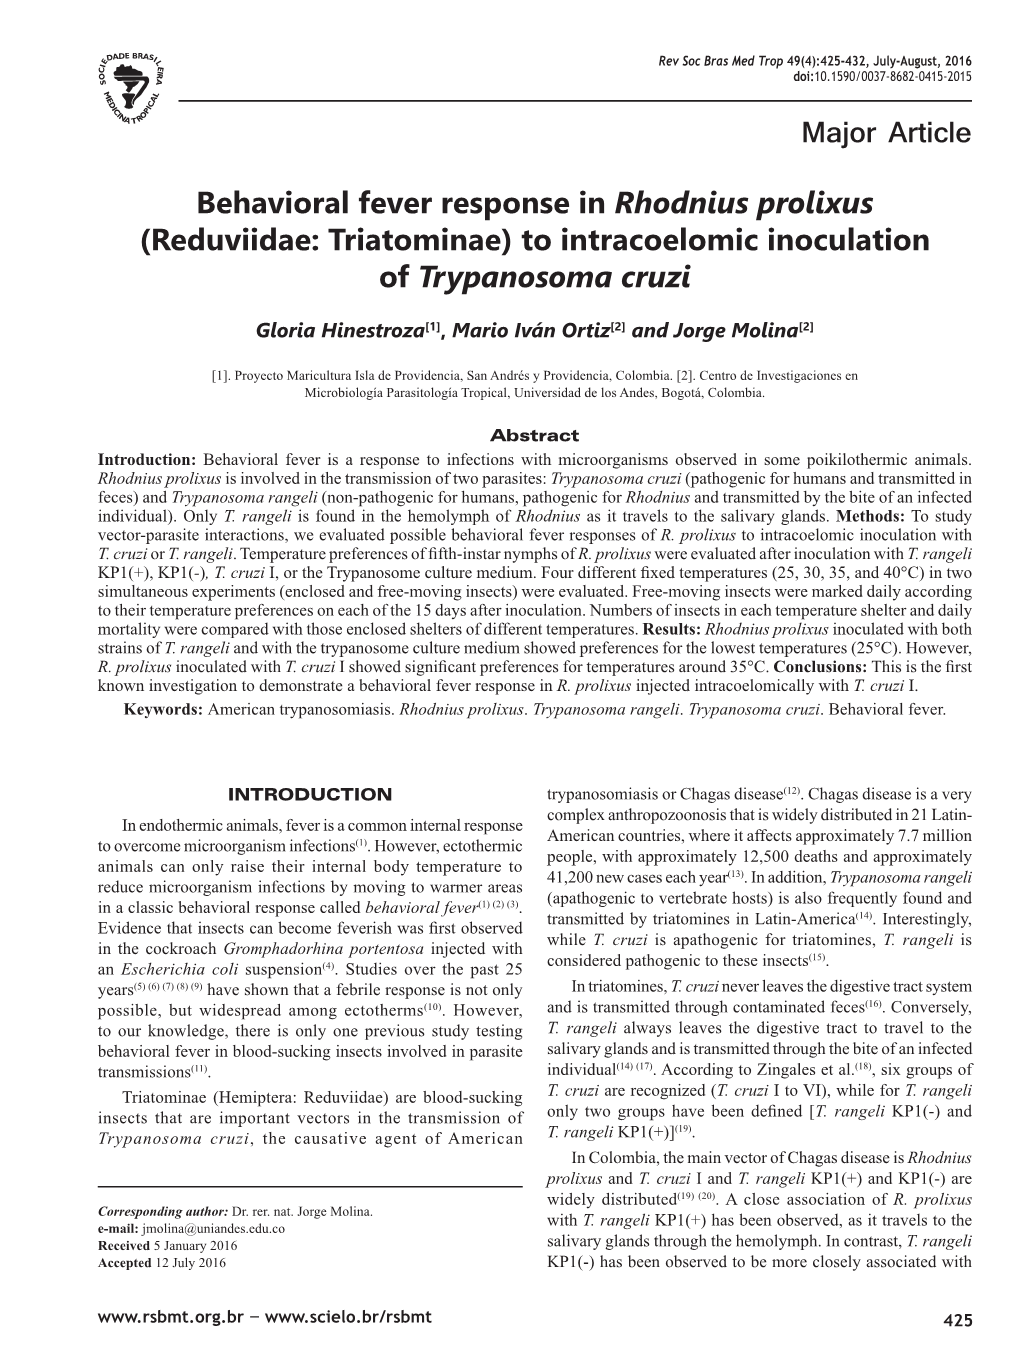 Behavioral Fever Response in Rhodnius Prolixus (Reduviidae: Triatominae) to Intracoelomic Inoculation of Trypanosoma Cruzi